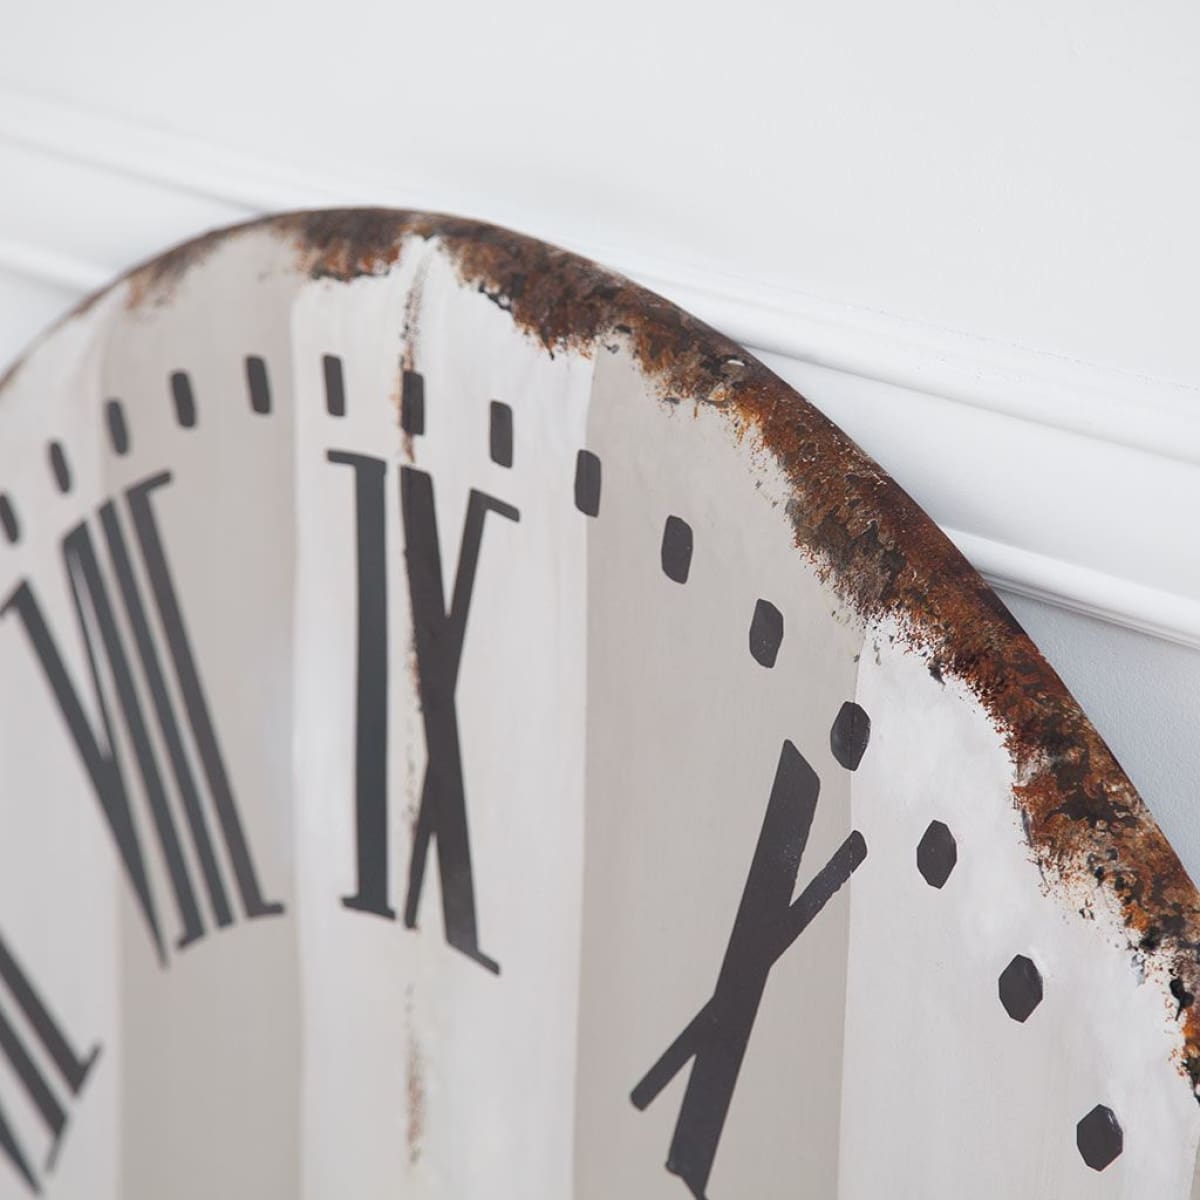 Belton Wall Clock Brown Metal | 42 - wall-clocks